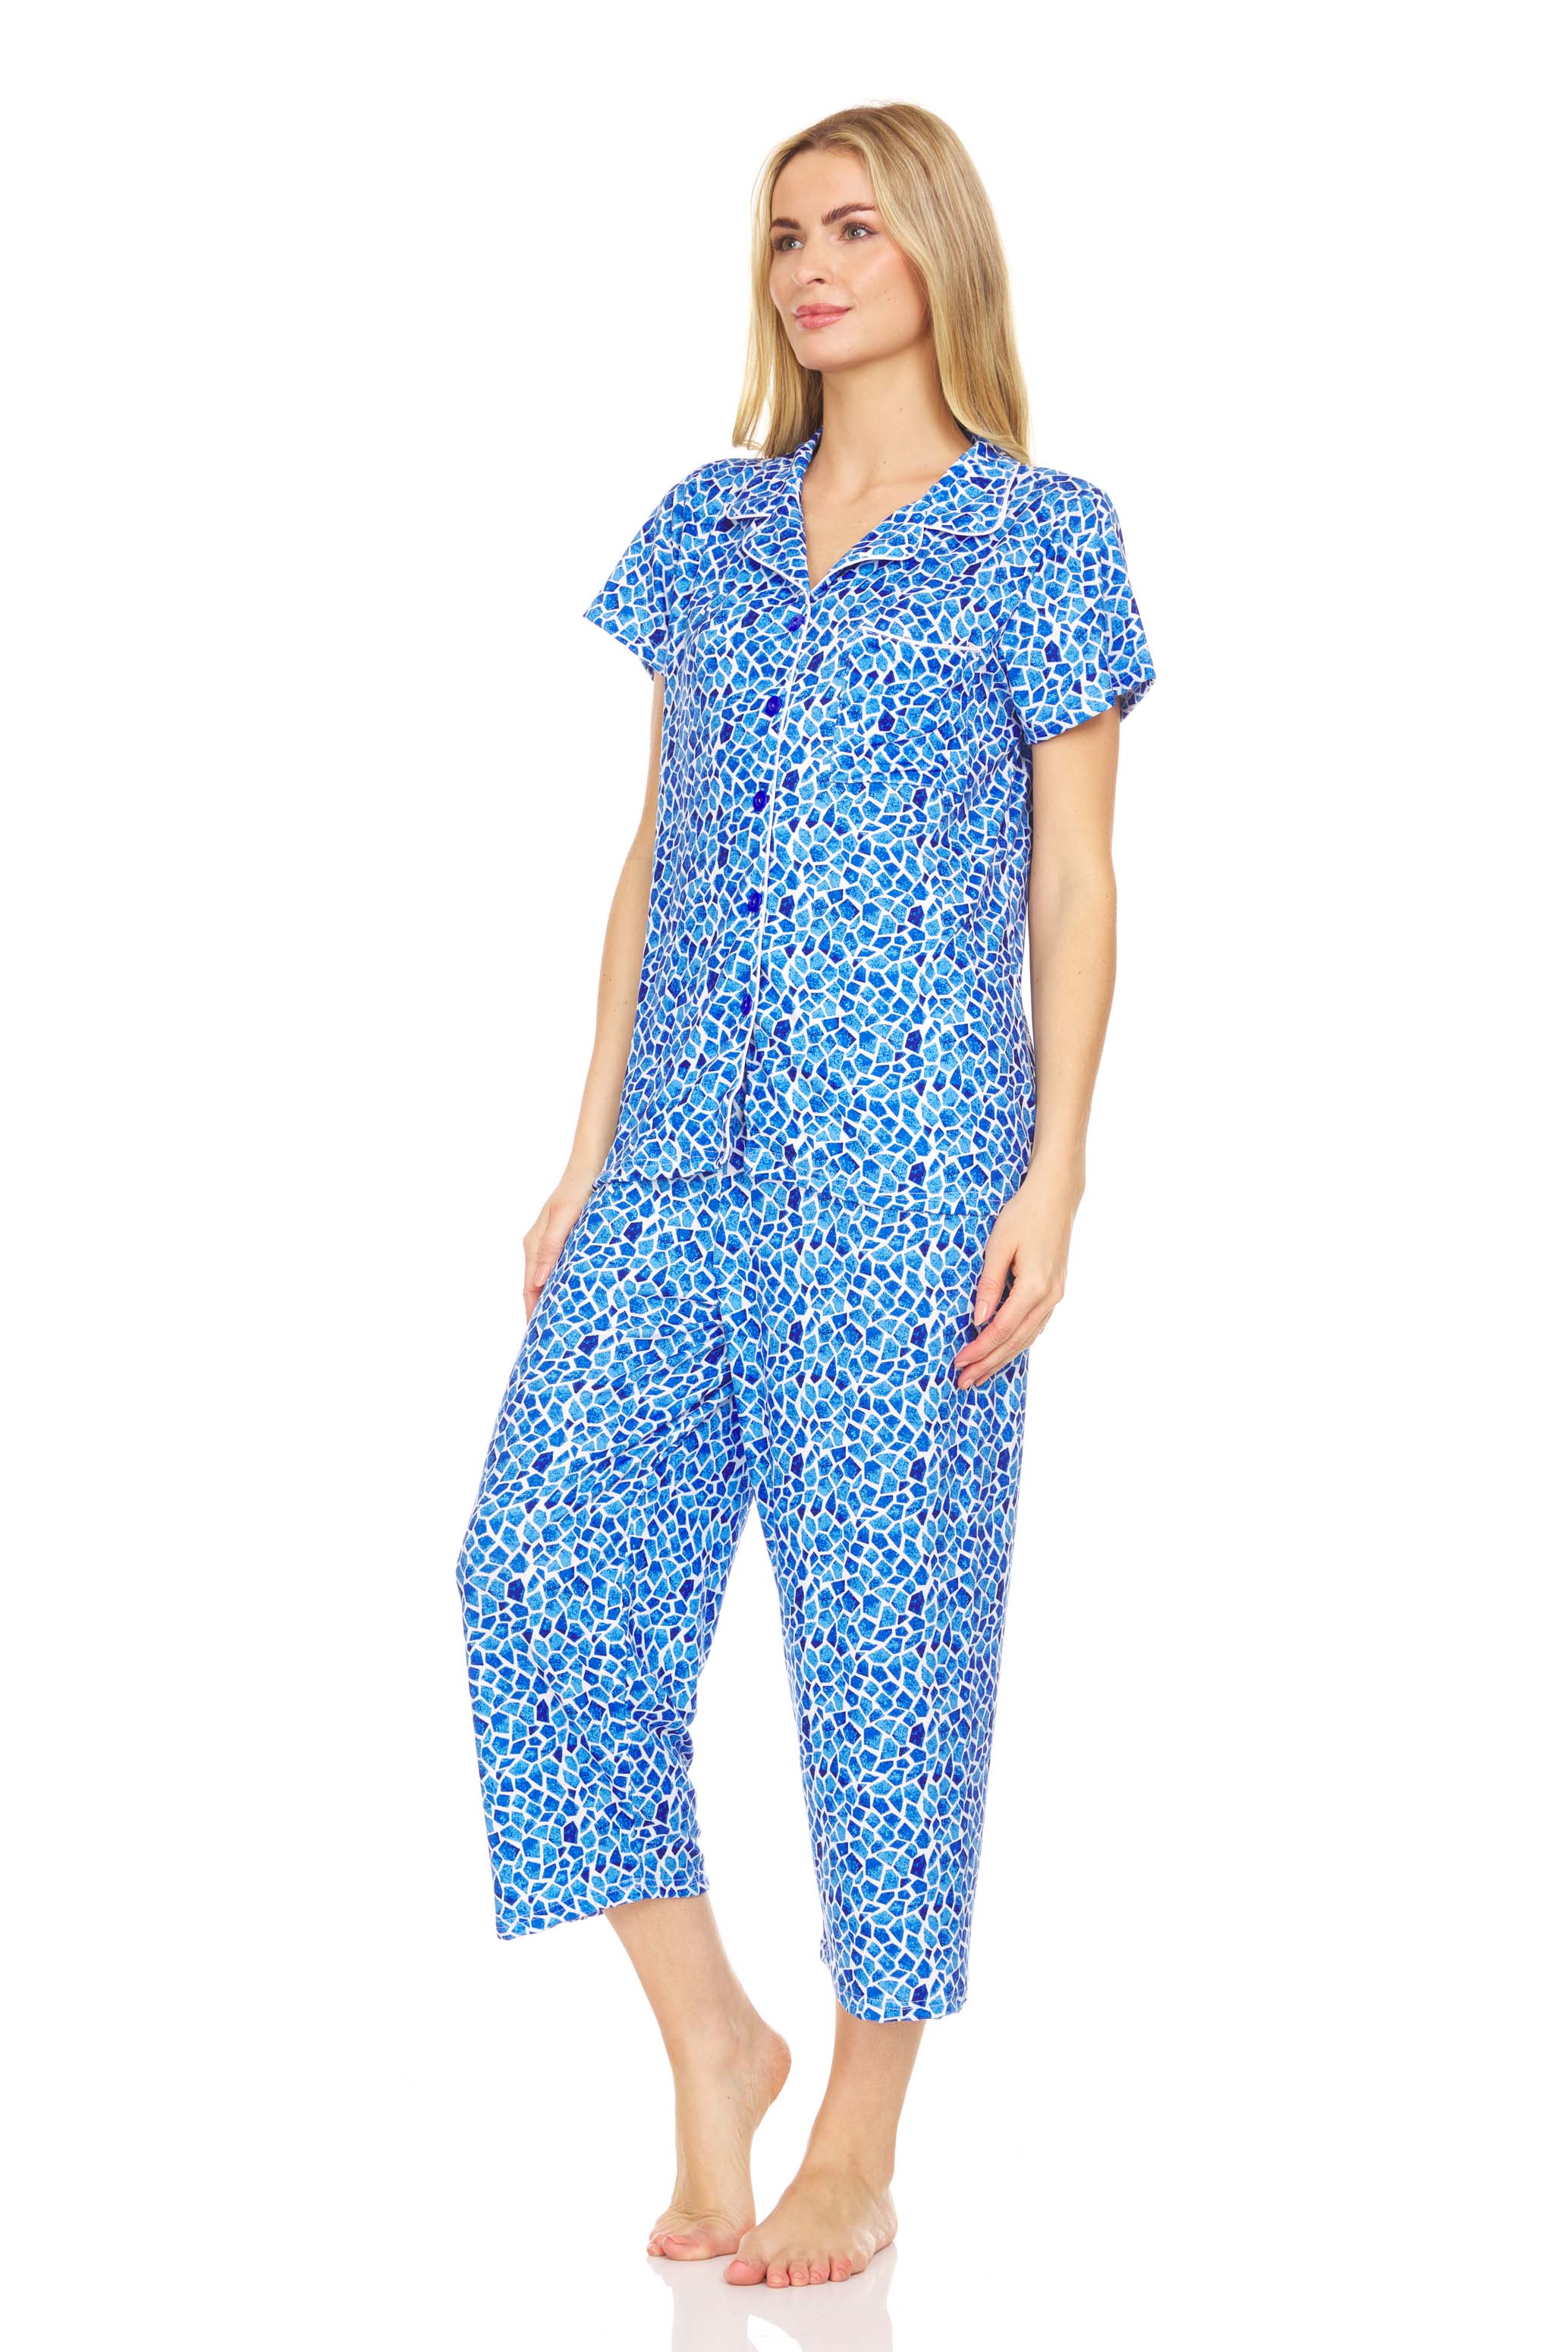 Lati Fashion 8103C Womens Sleepwear Woman Short Sleeve Button Down Pajamas Capri set